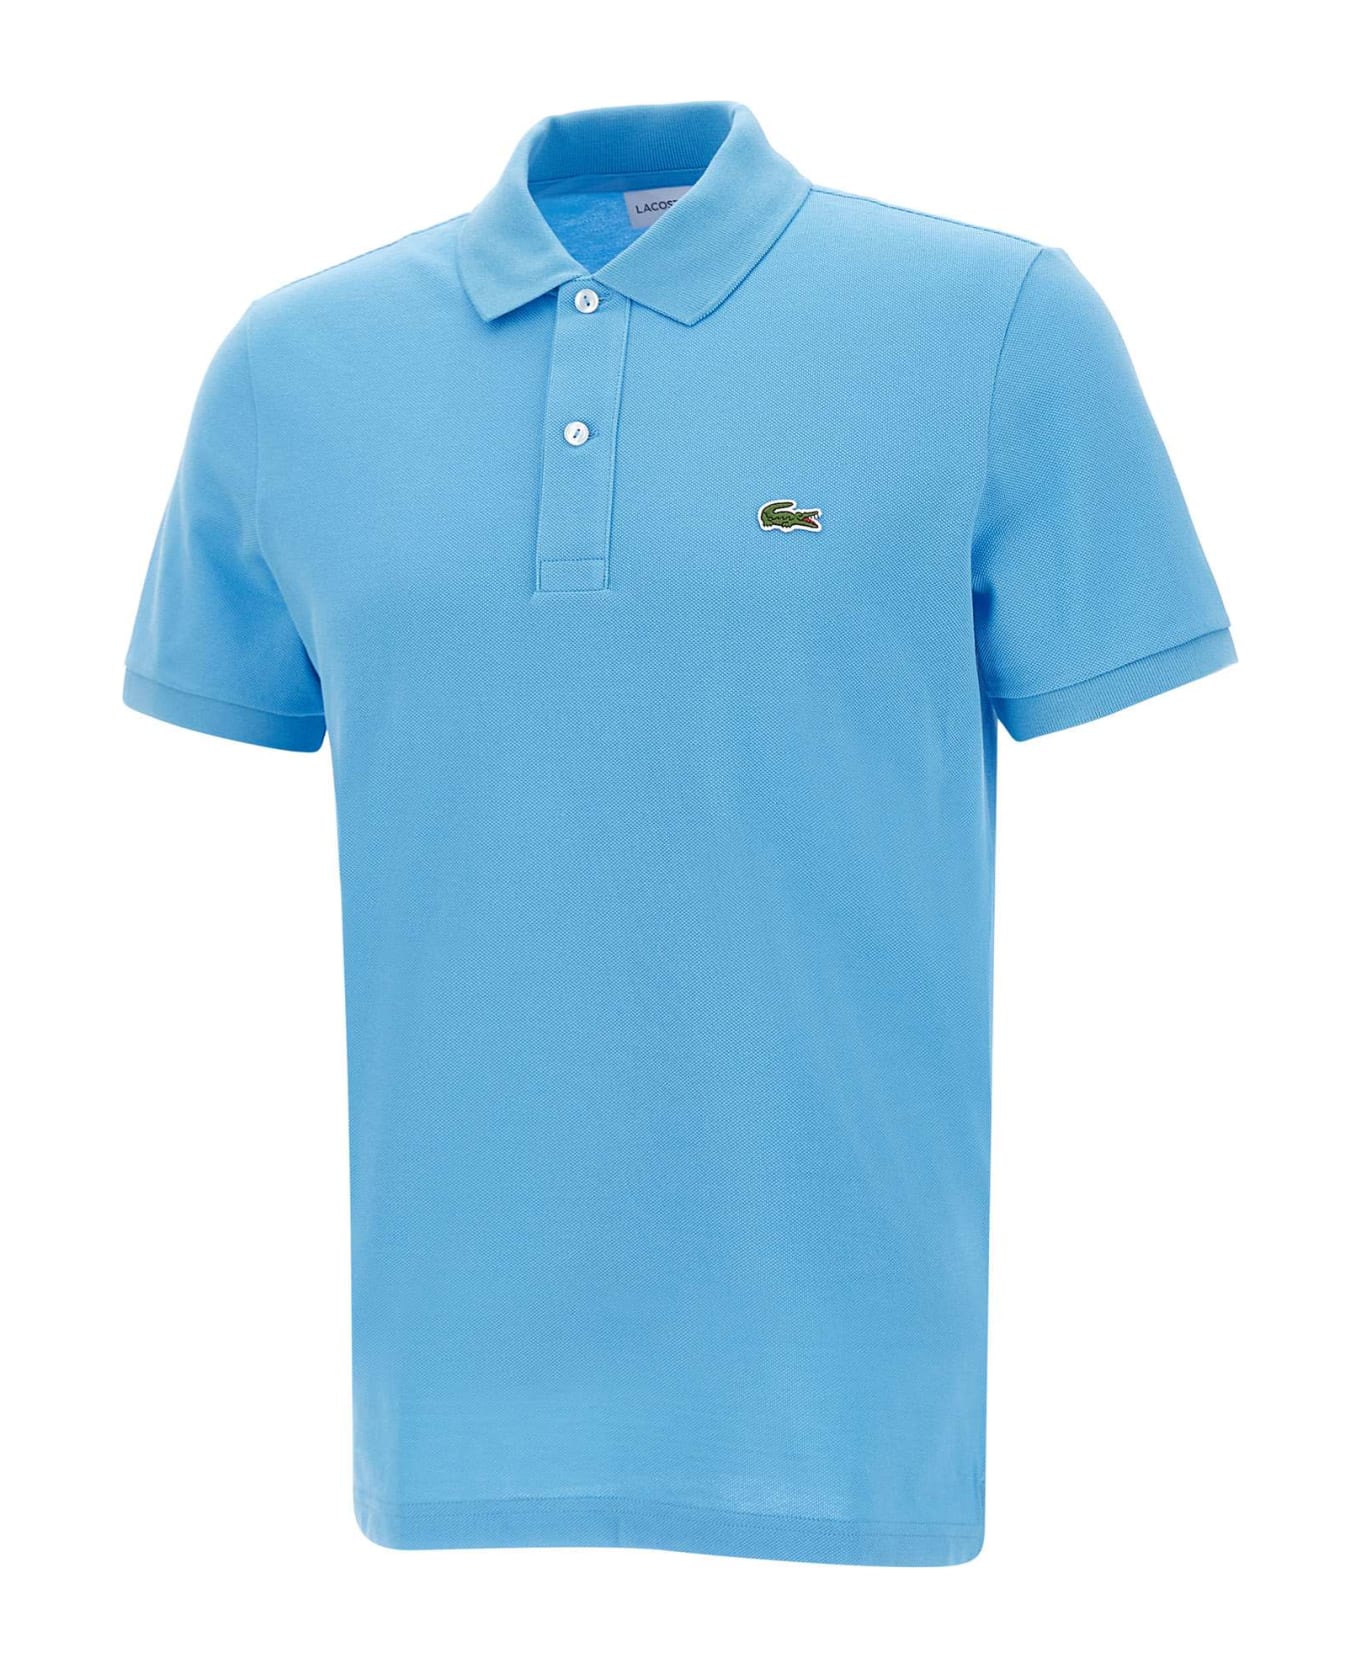 Lacoste Pique Cotton Polo Shirt - LIGHT BLUE